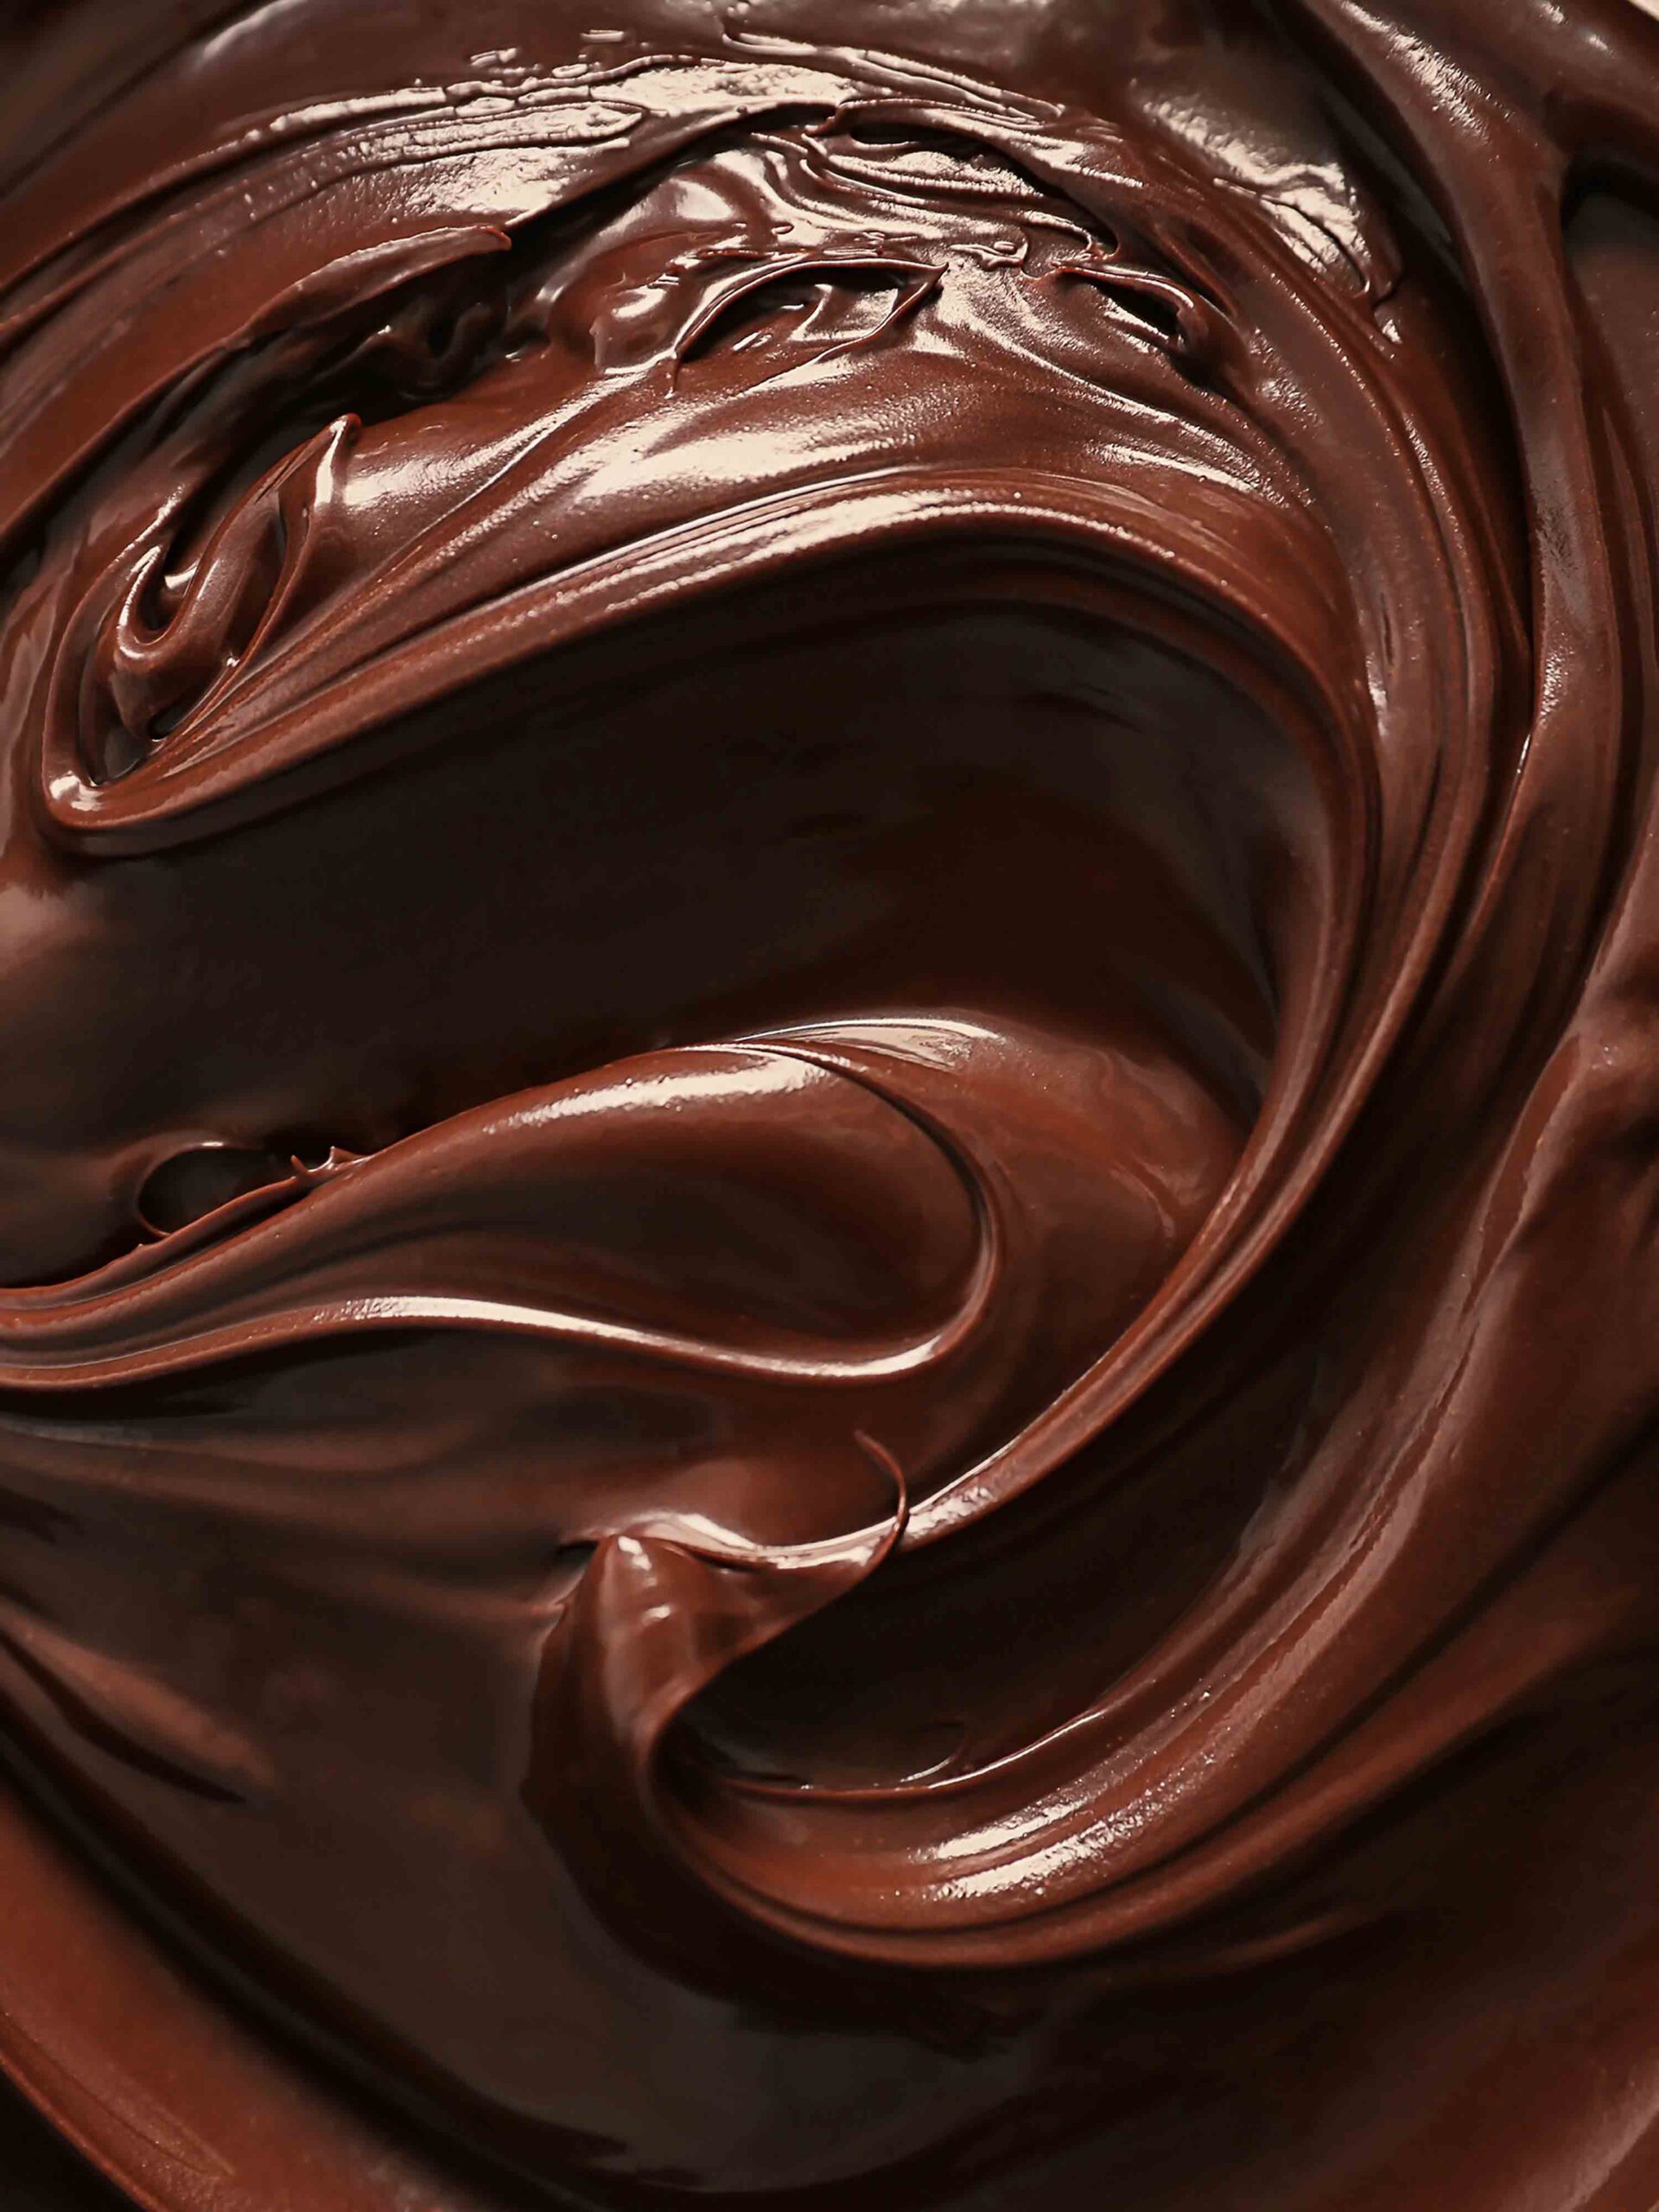 Swirls of melted chocolate